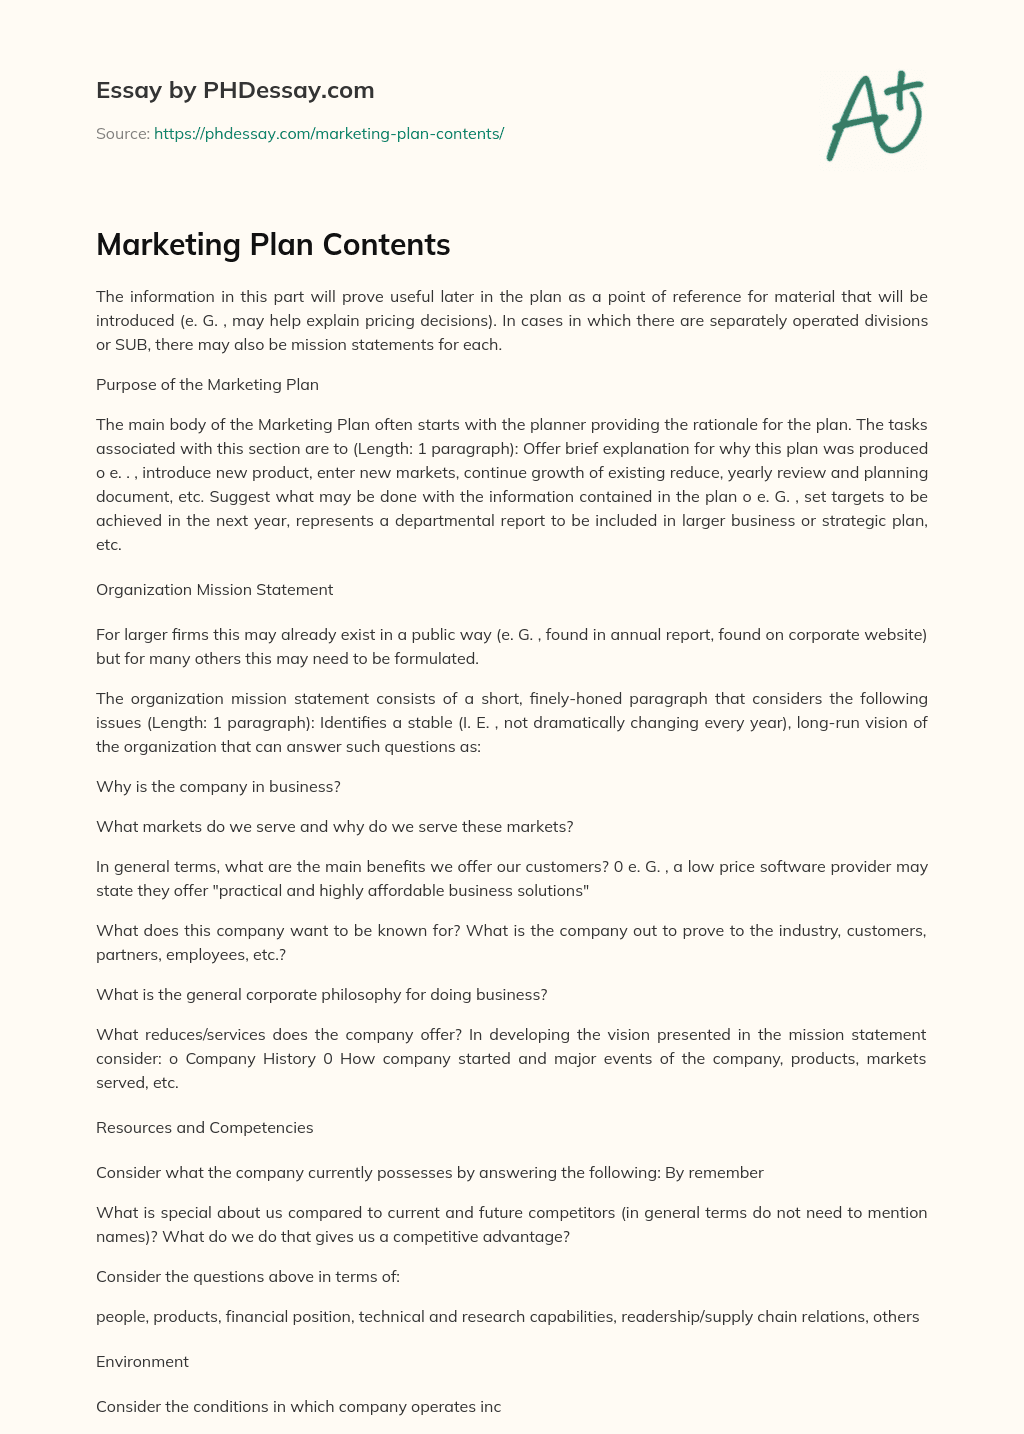 Marketing Plan Contents essay